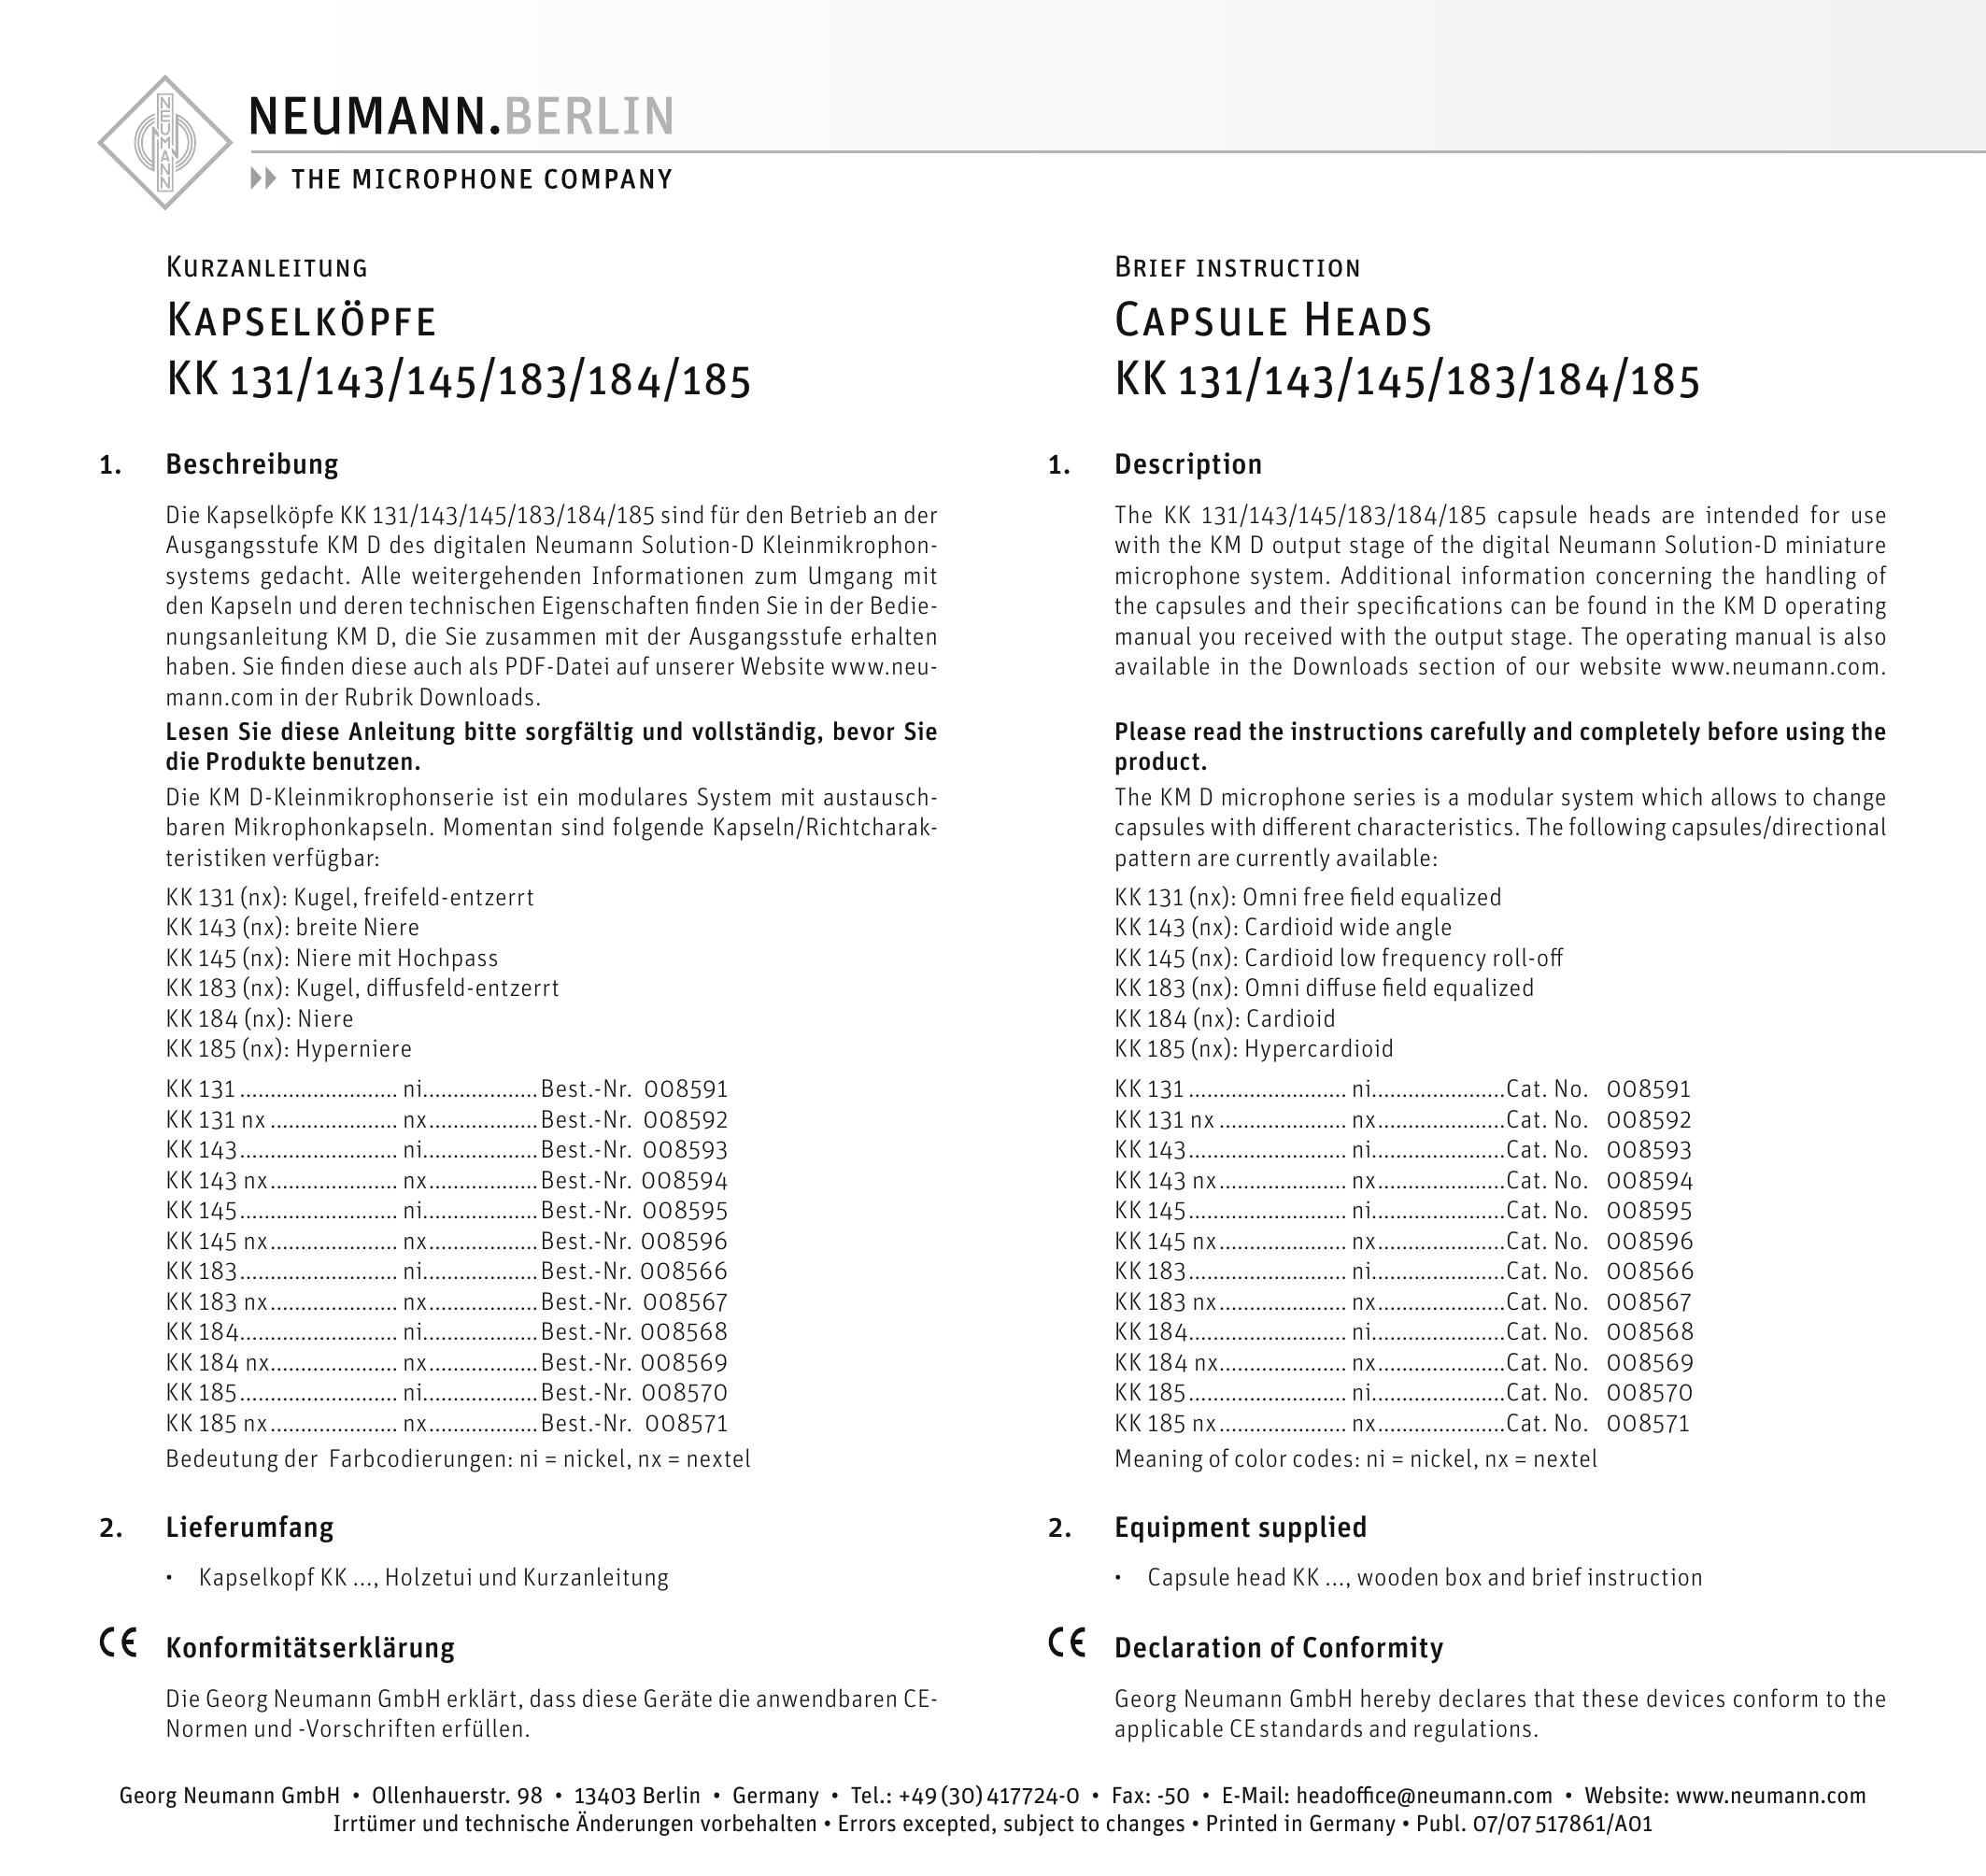 Neumann.Berlin KK 131 Microphone User Manual